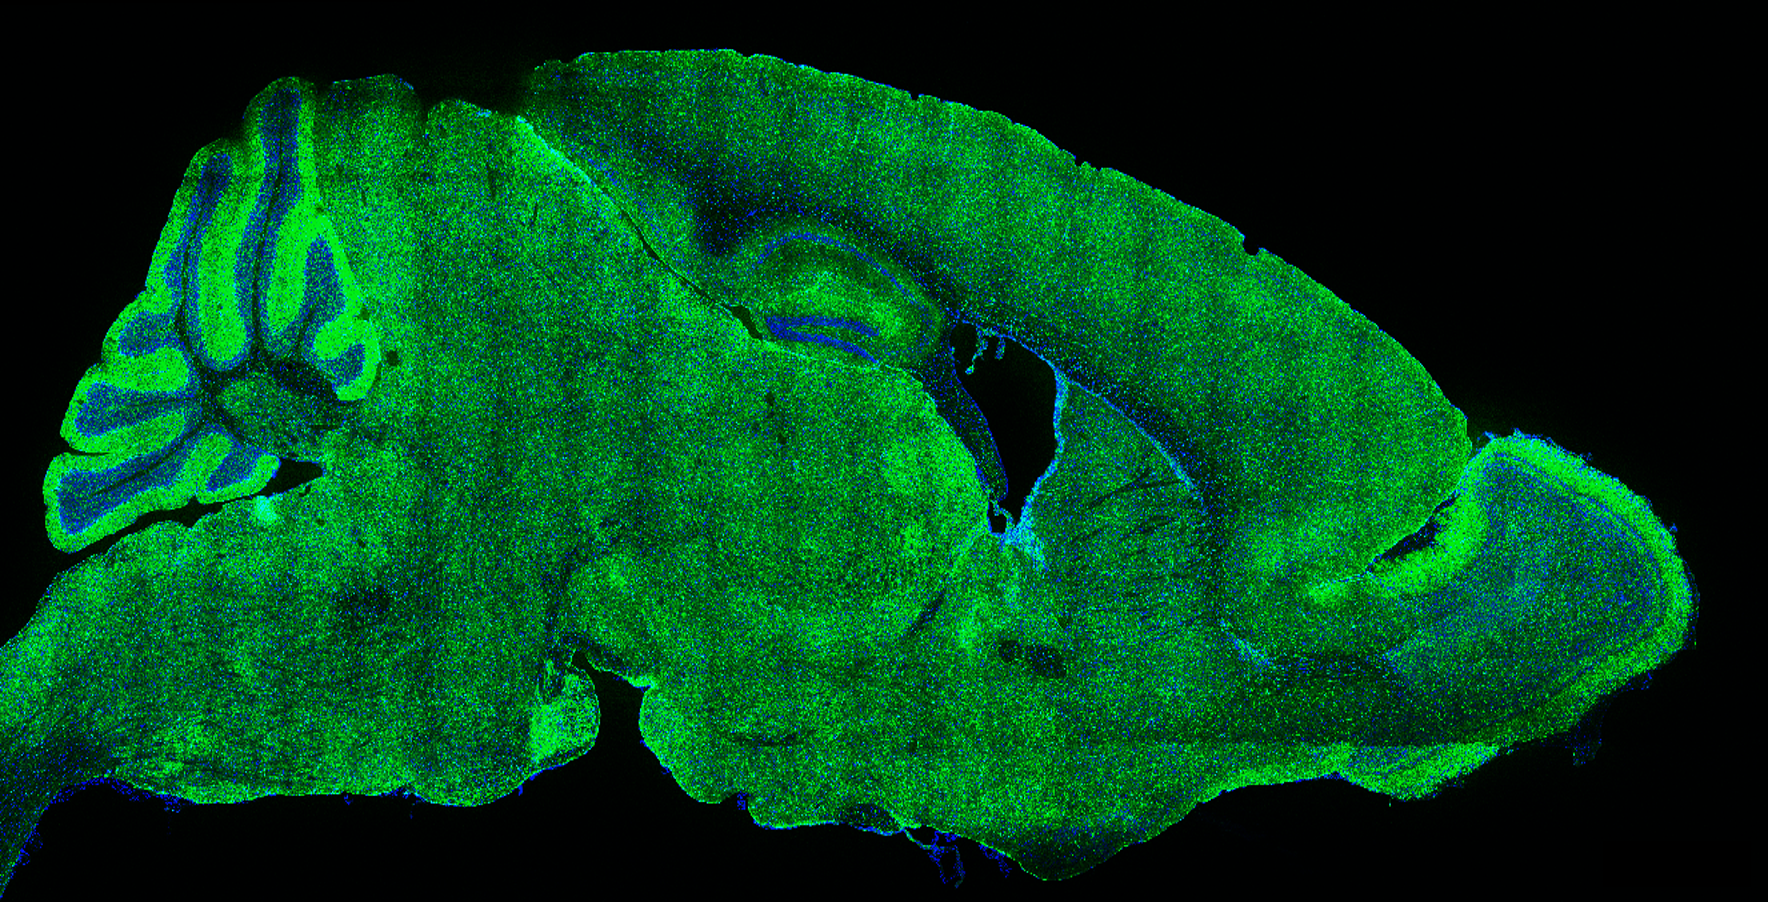 Astrocytes in the brain